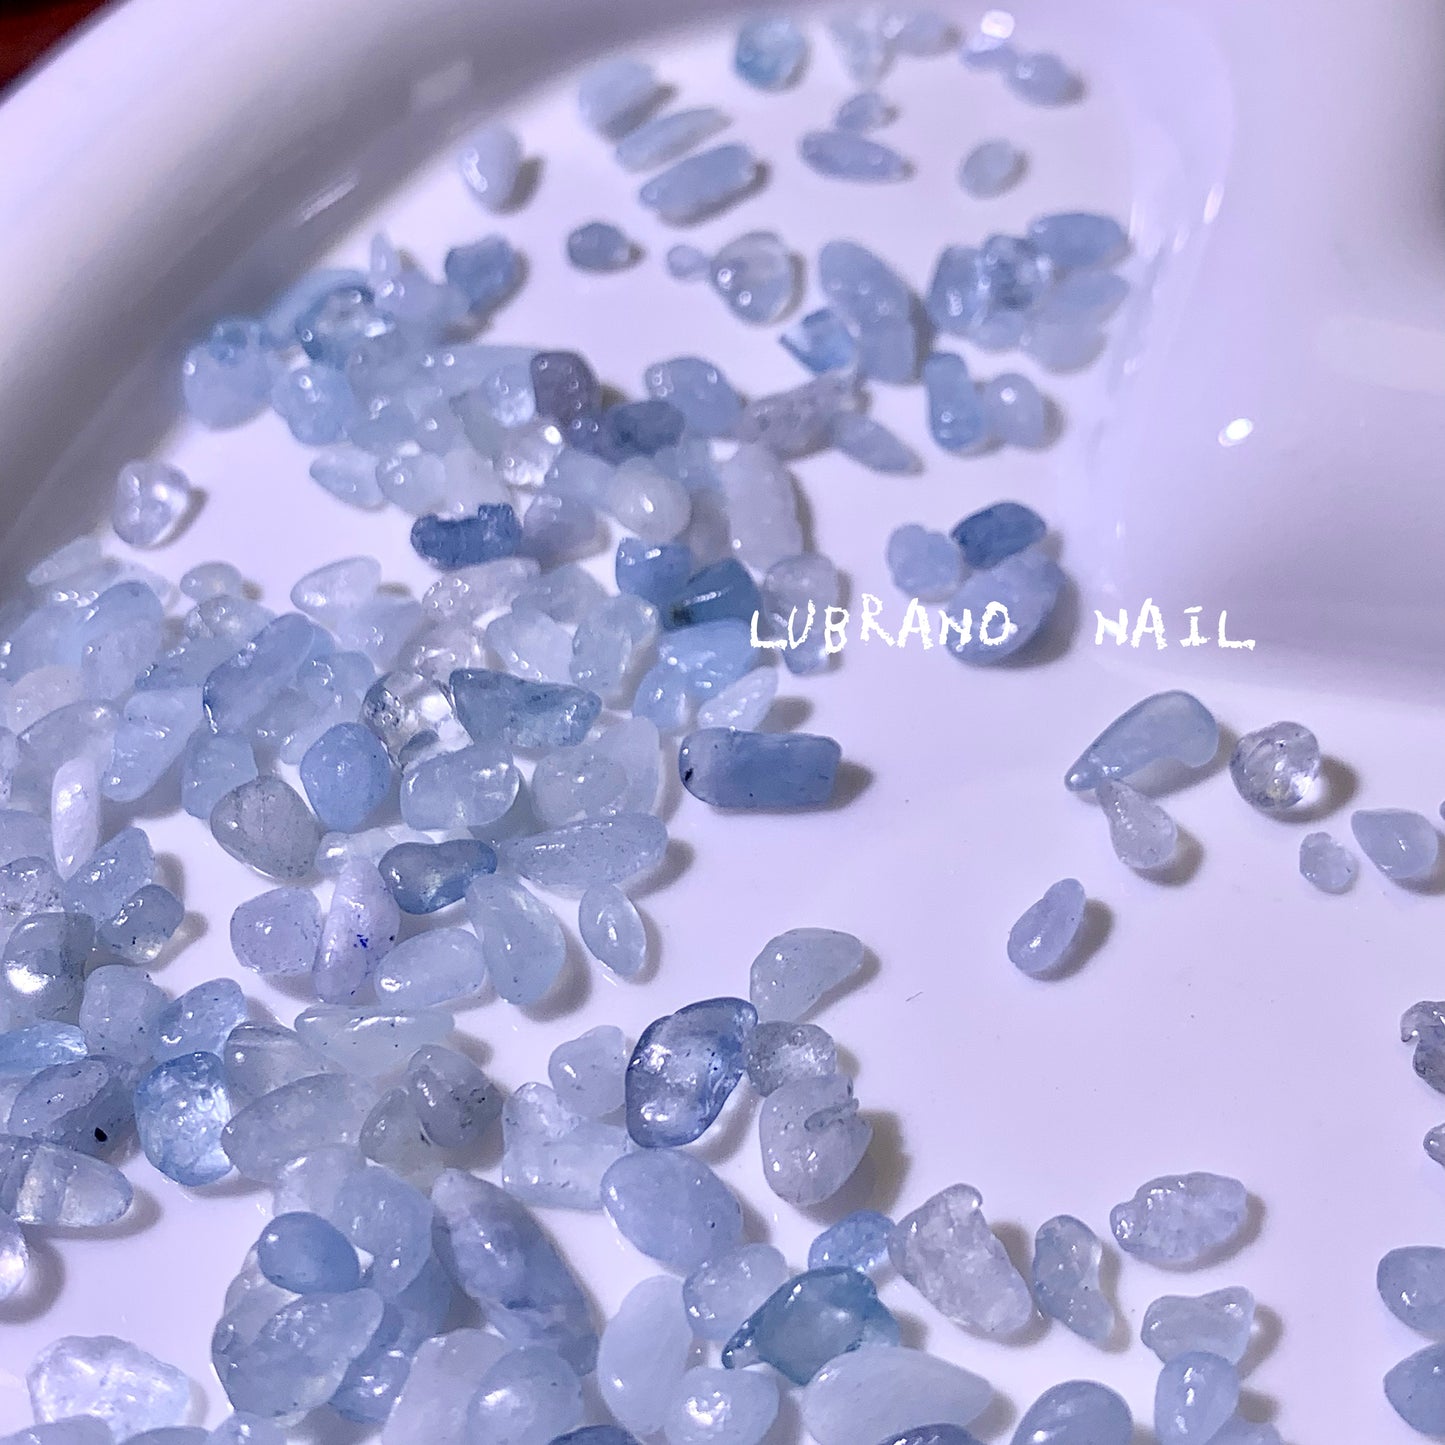 LUBRANO NAIL - Blue Crystal Love Nail Decoration, Aquamarine